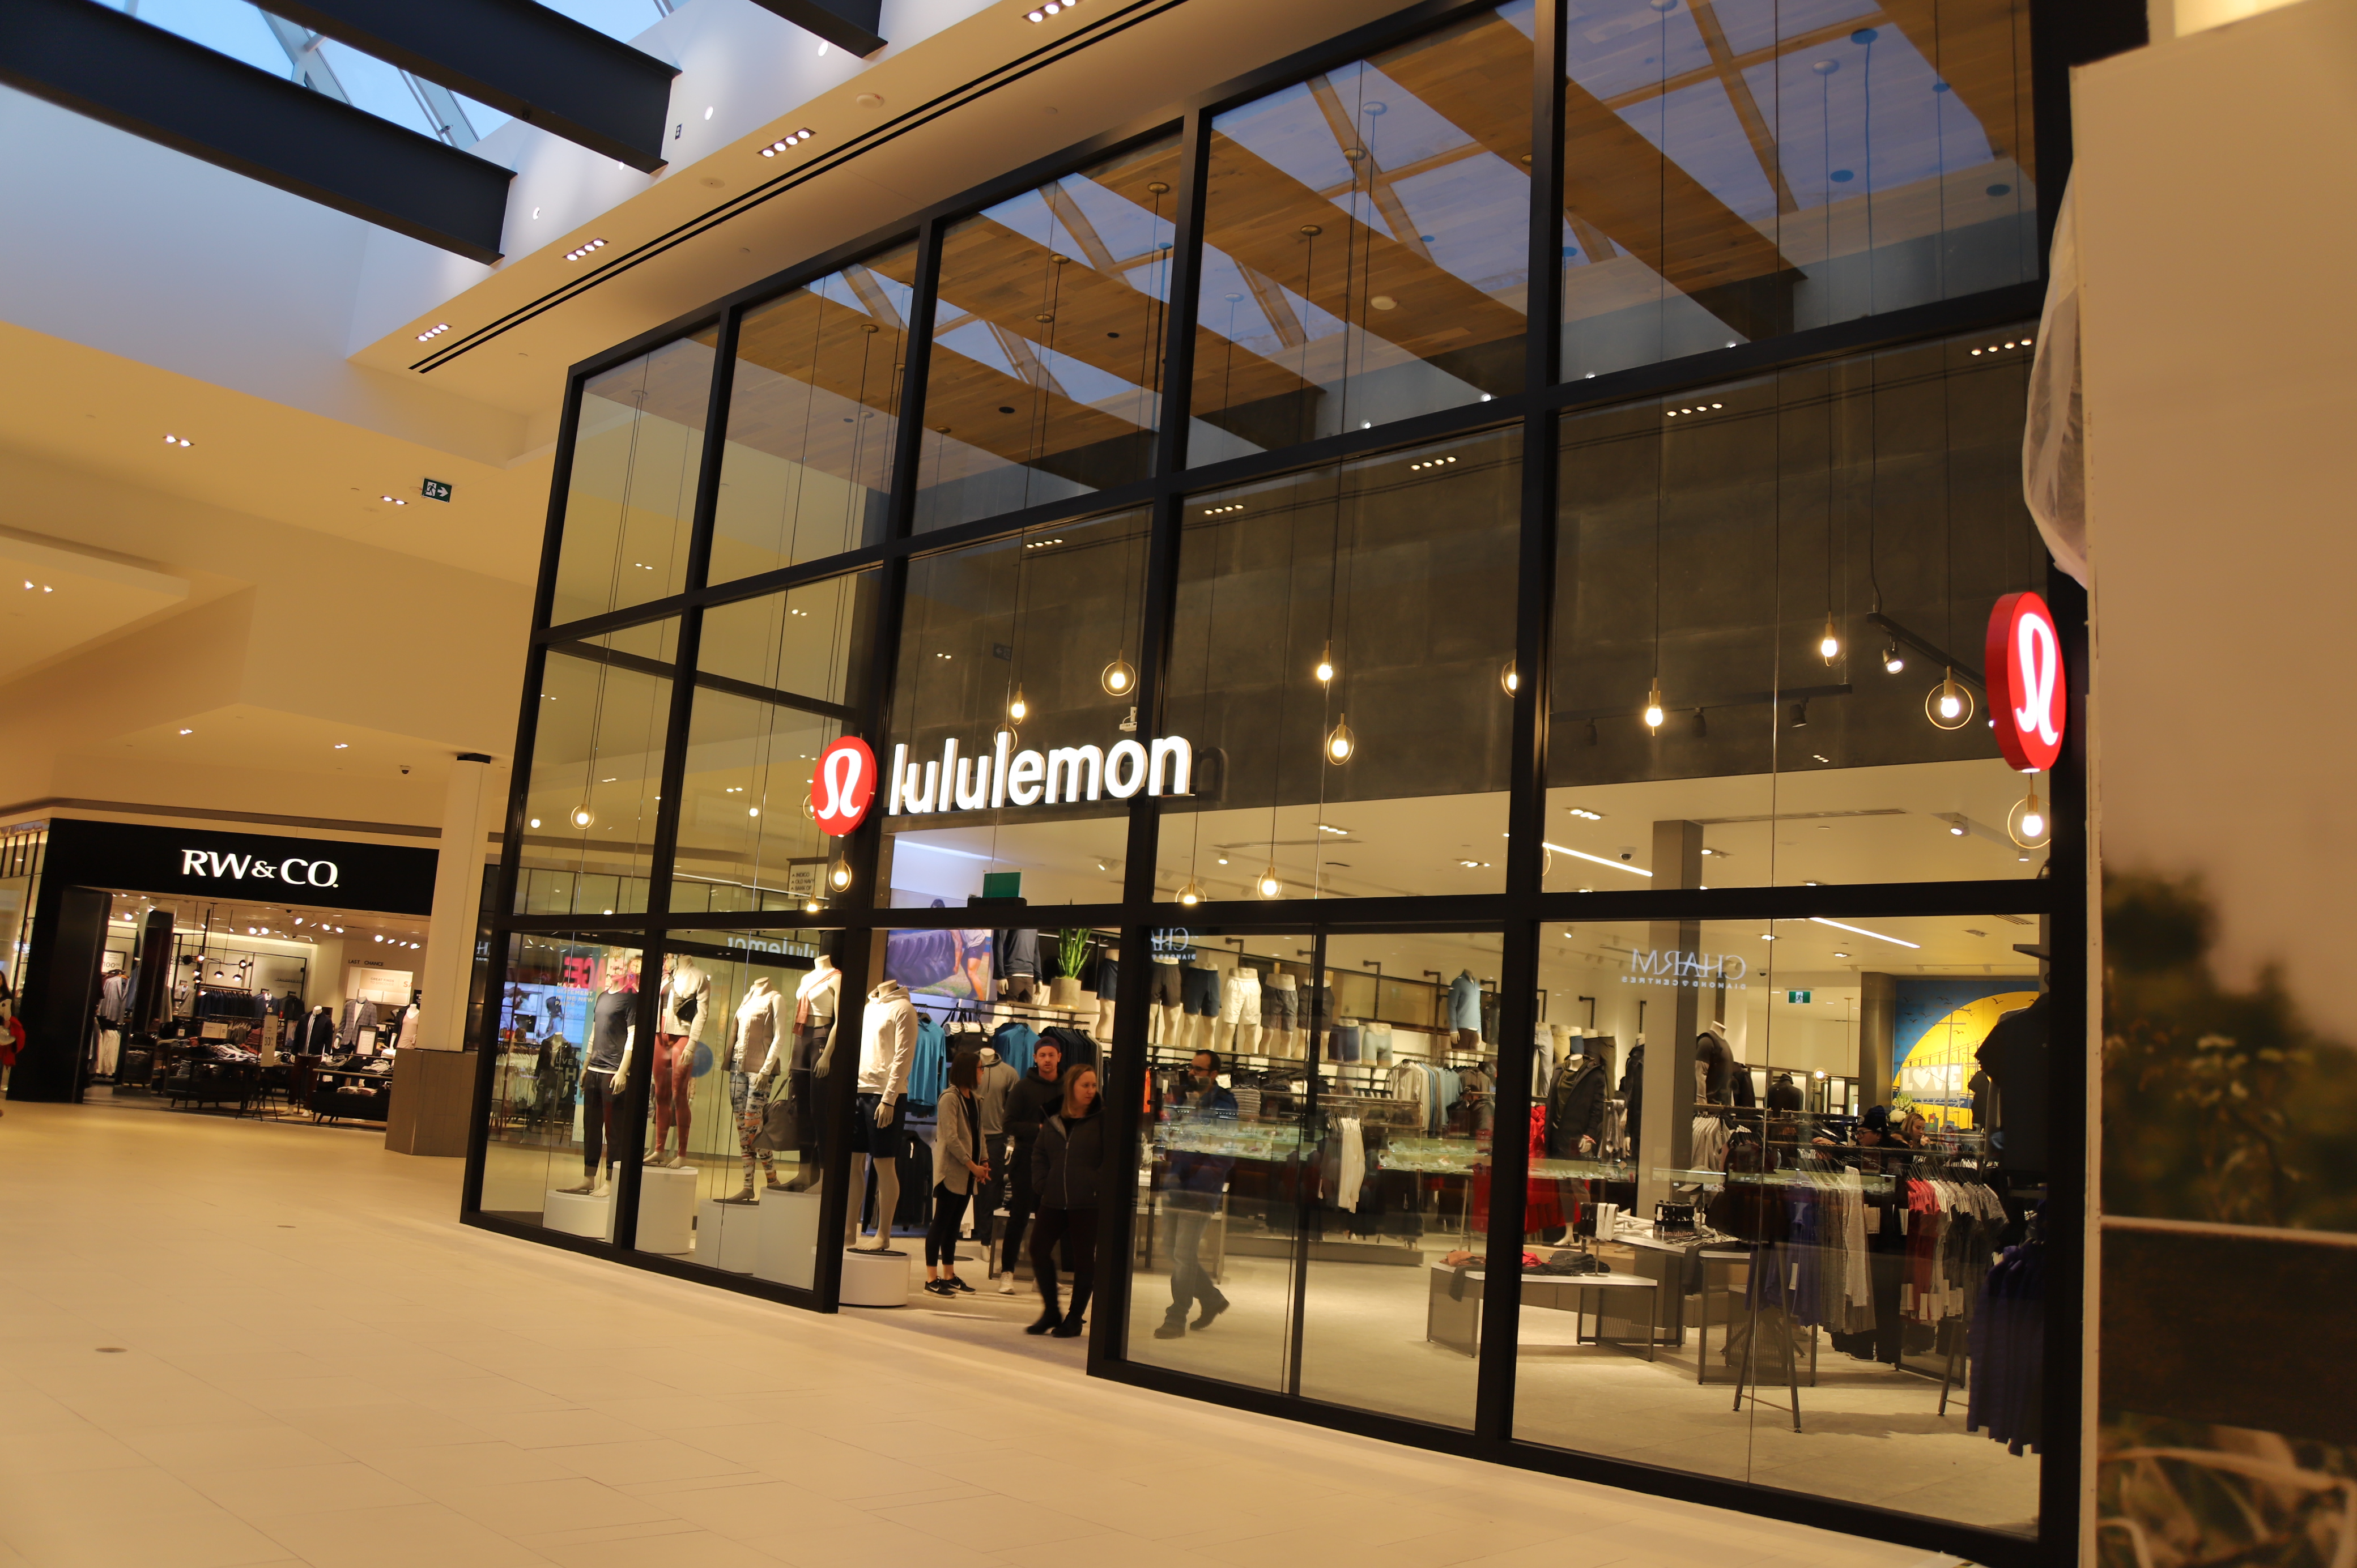 lululemon in mall